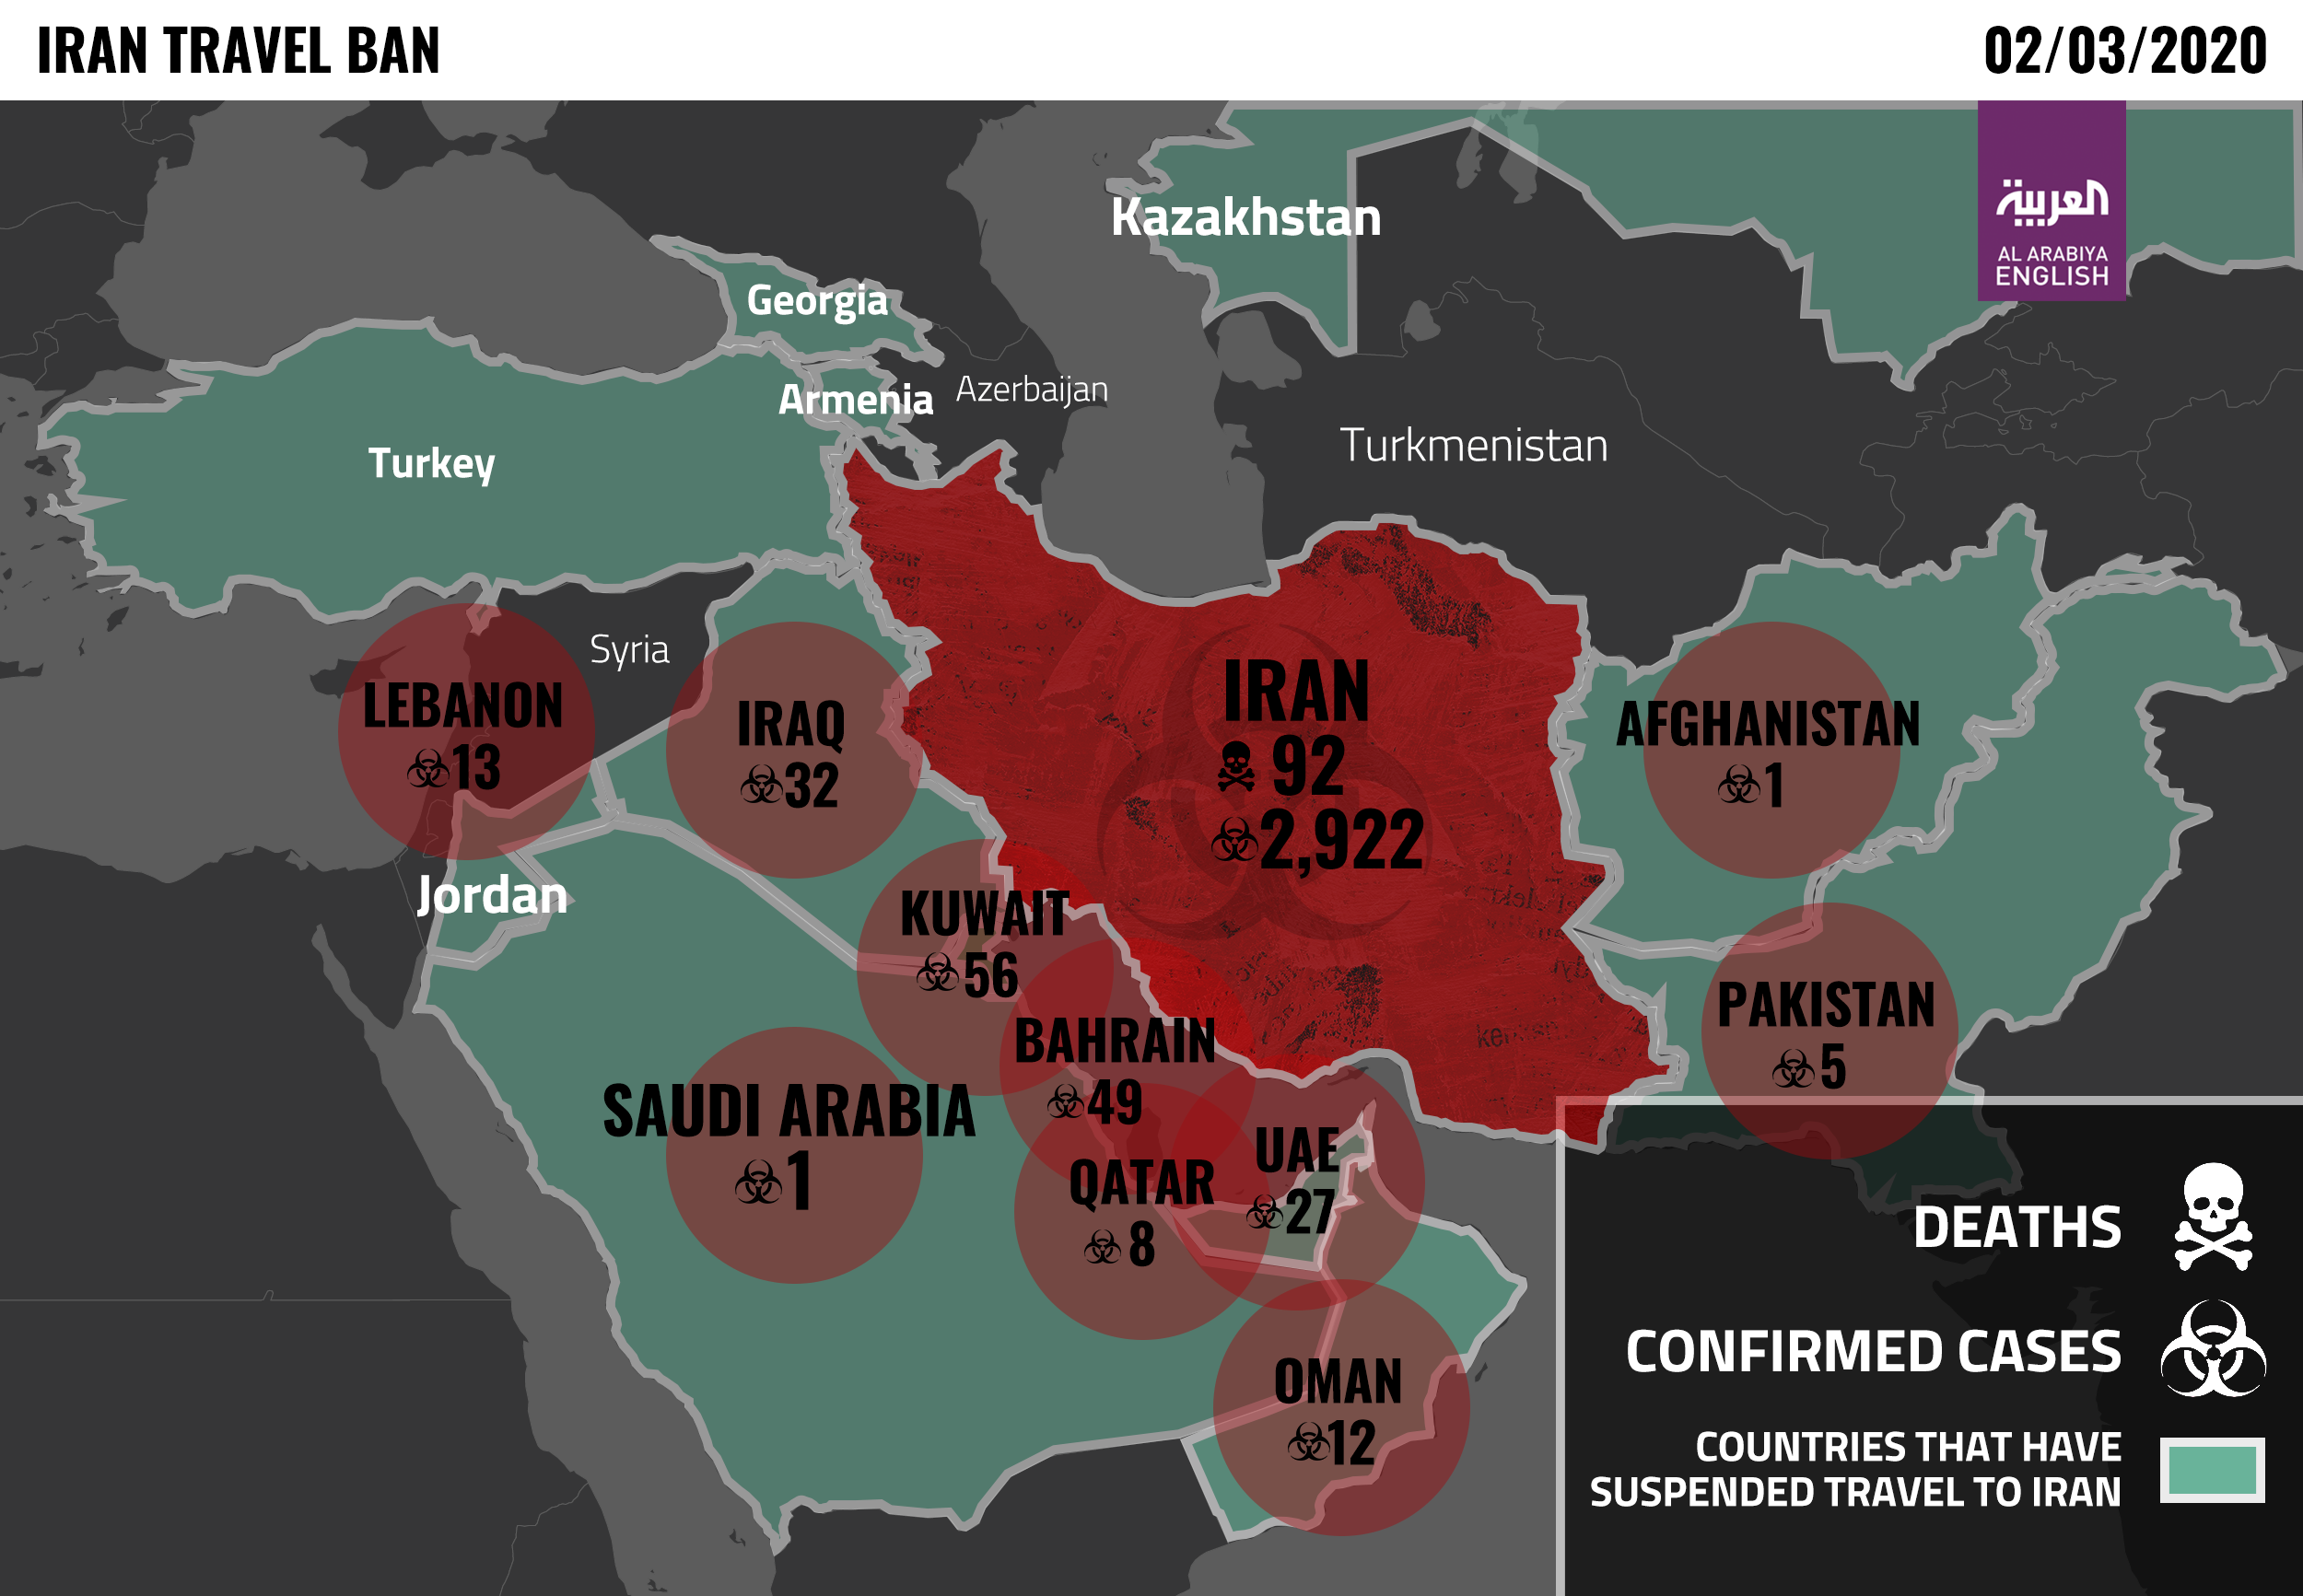 Iran Travel ban infographic 04/03/20